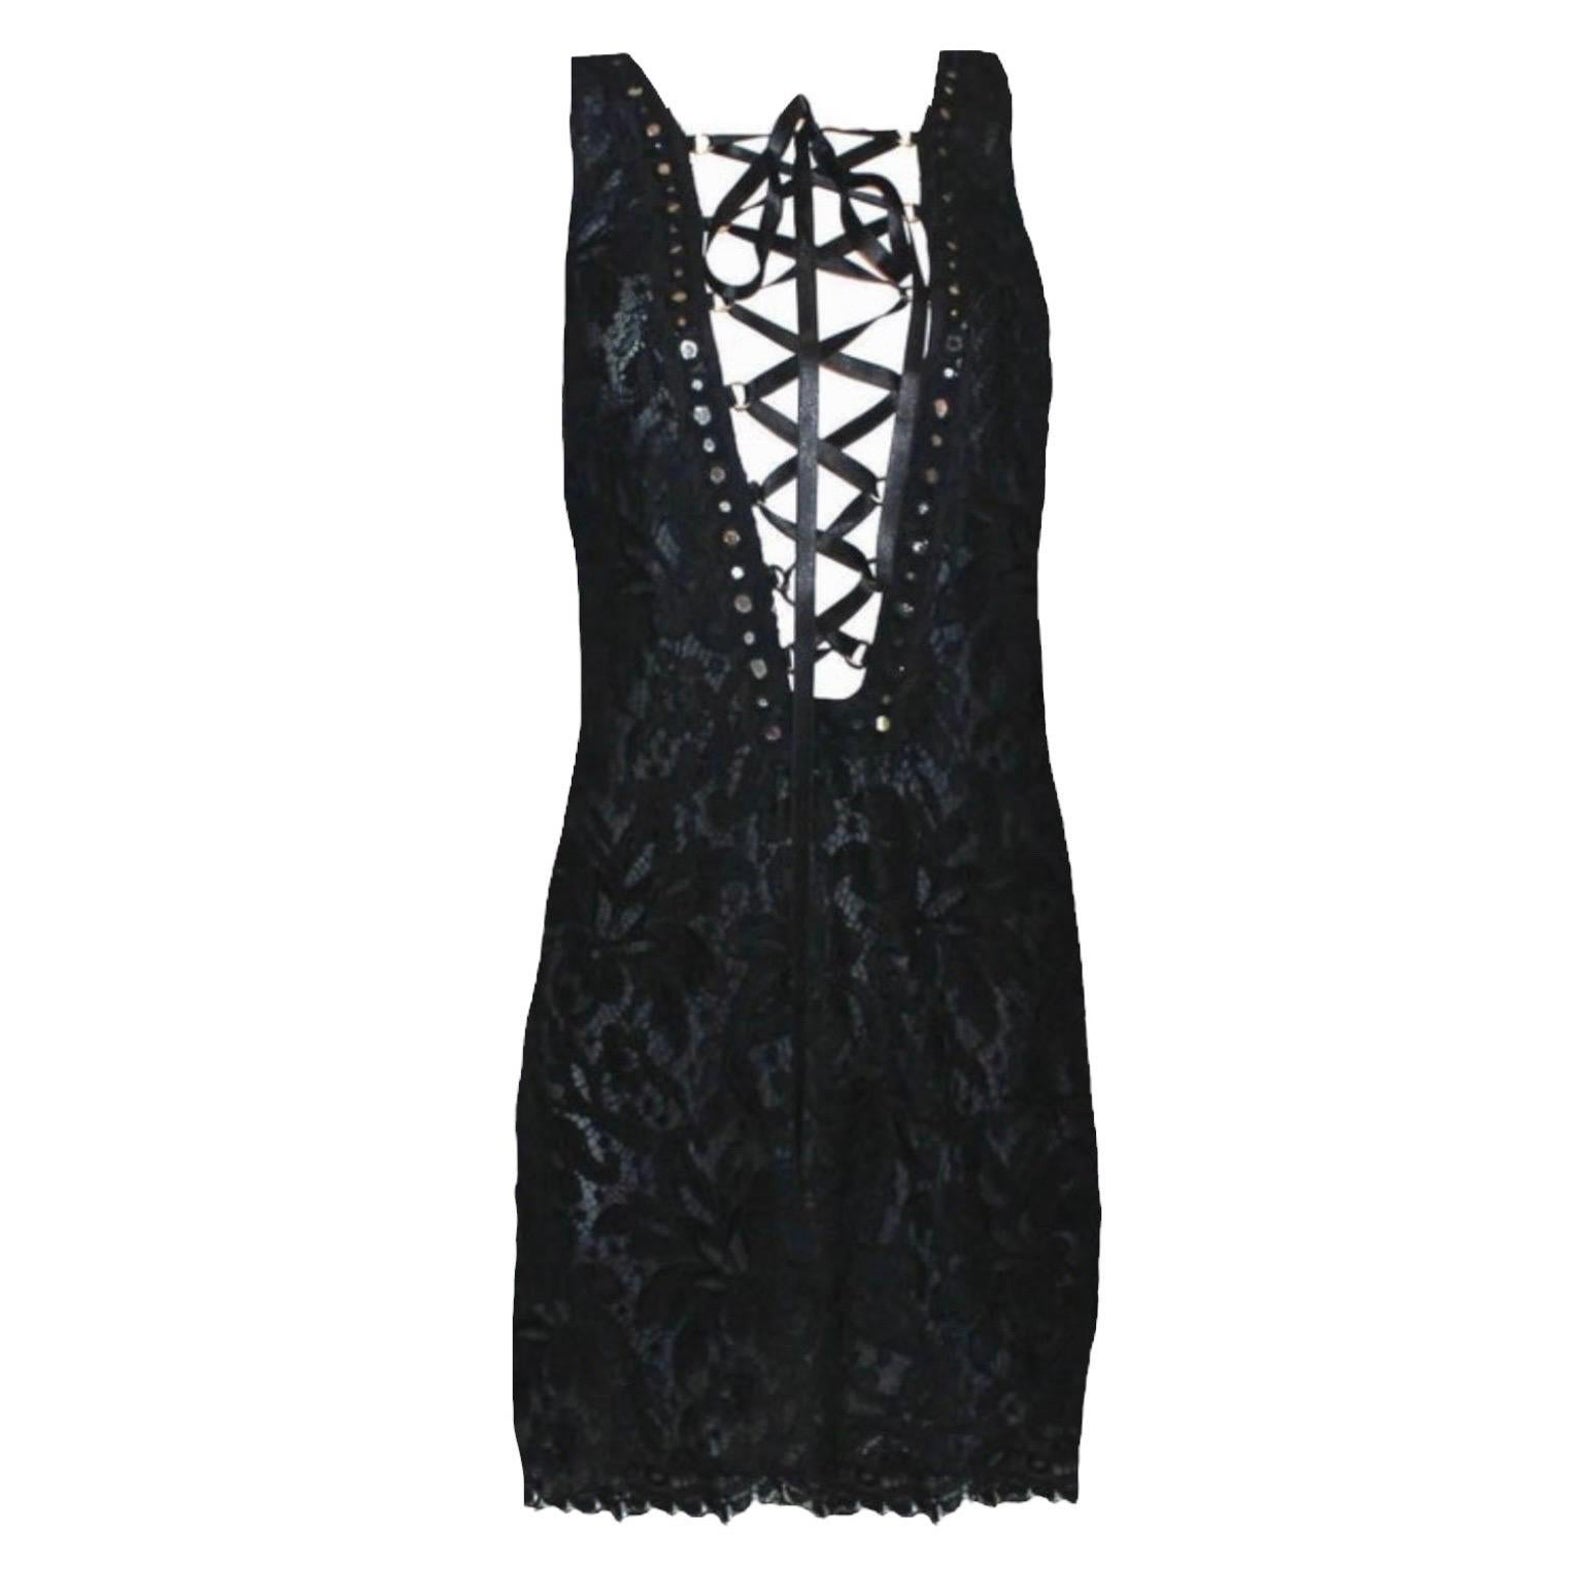 UNWORN Emilio Pucci by Peter Dundas Black Lace Mirror Lace Up Dress 38 For Sale